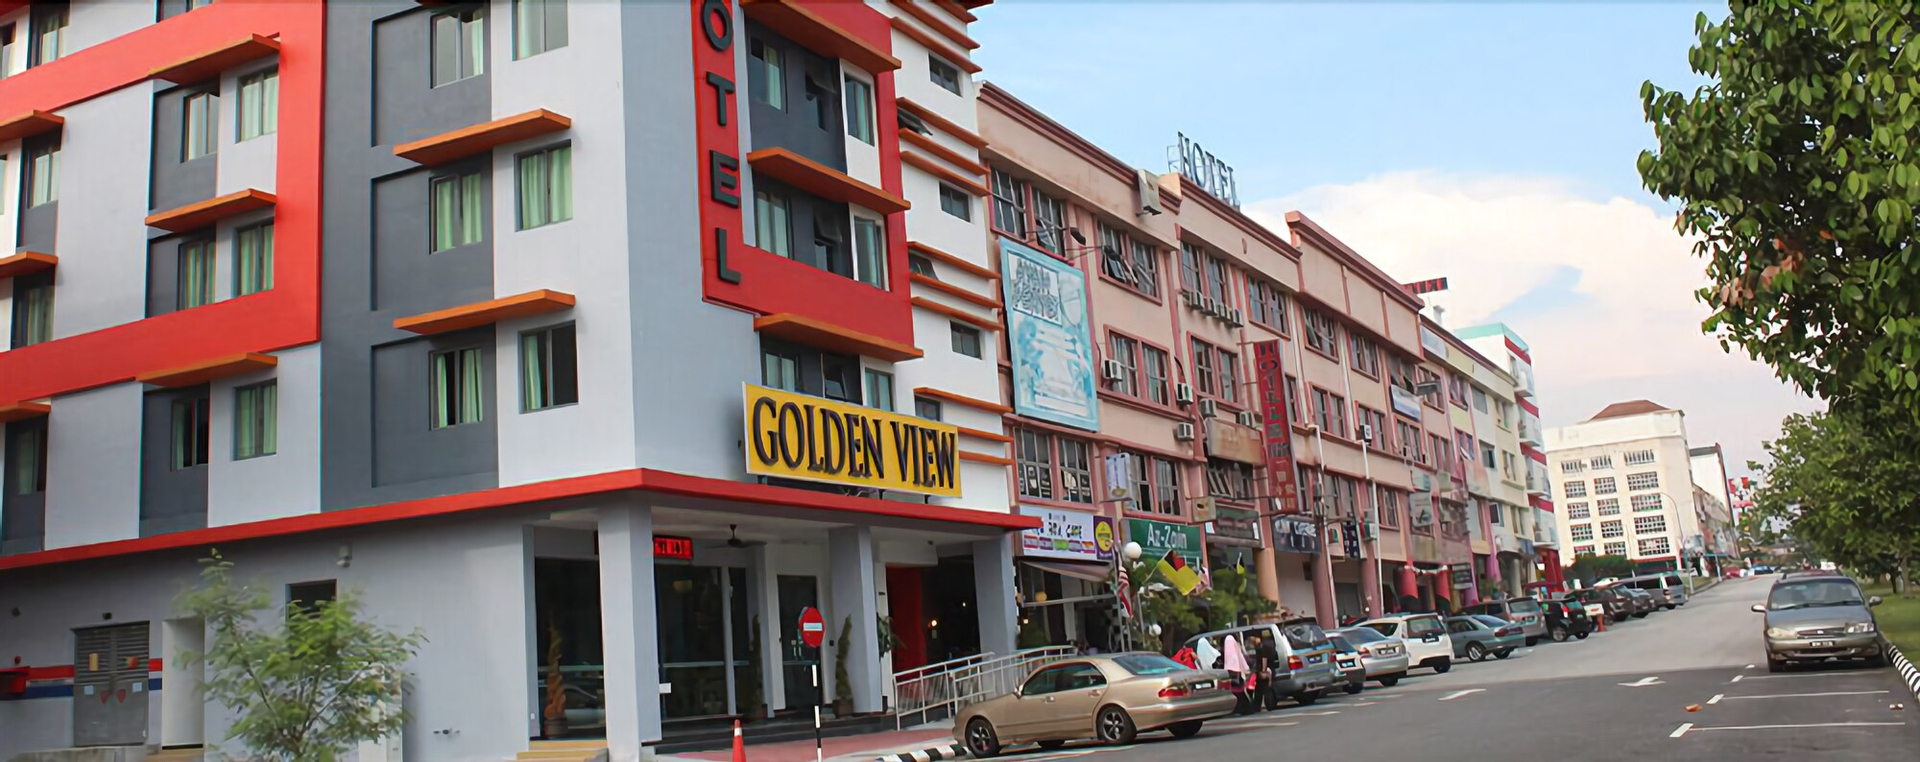 Hotel Golden View Nilai, Seremban